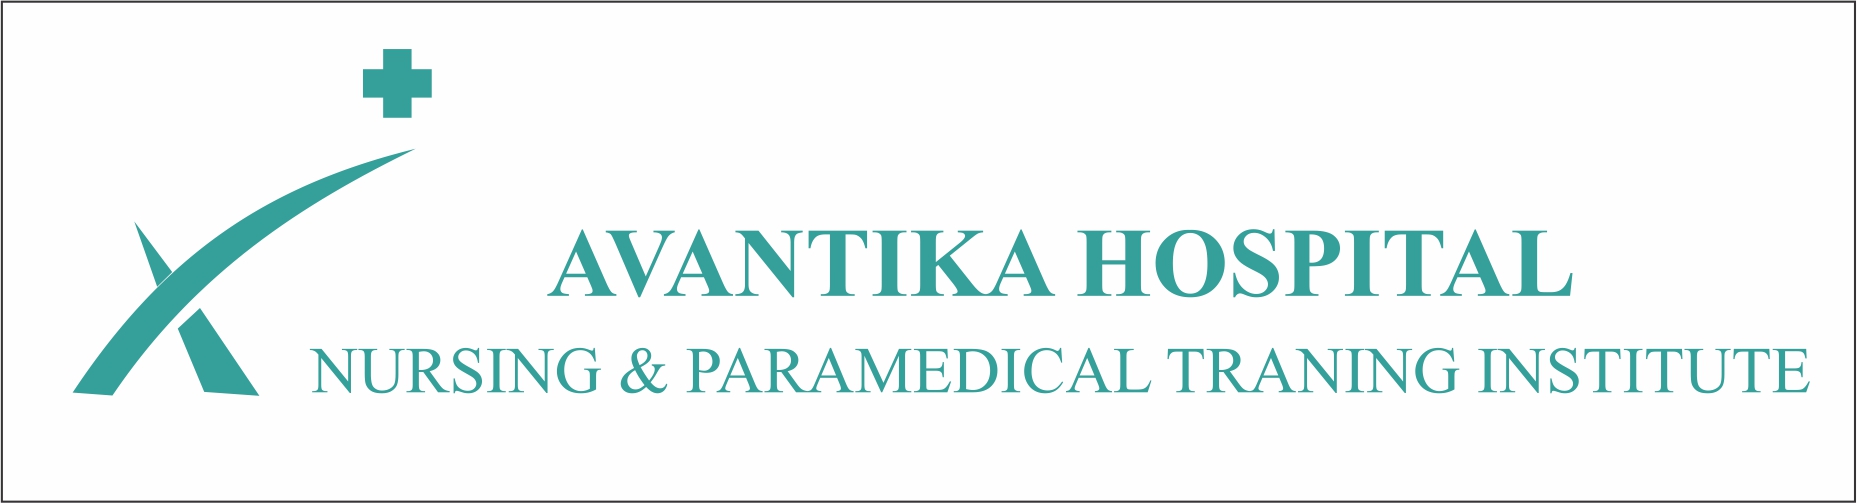 Avantika Multispeciality Hospital|Healthcare|Medical Services